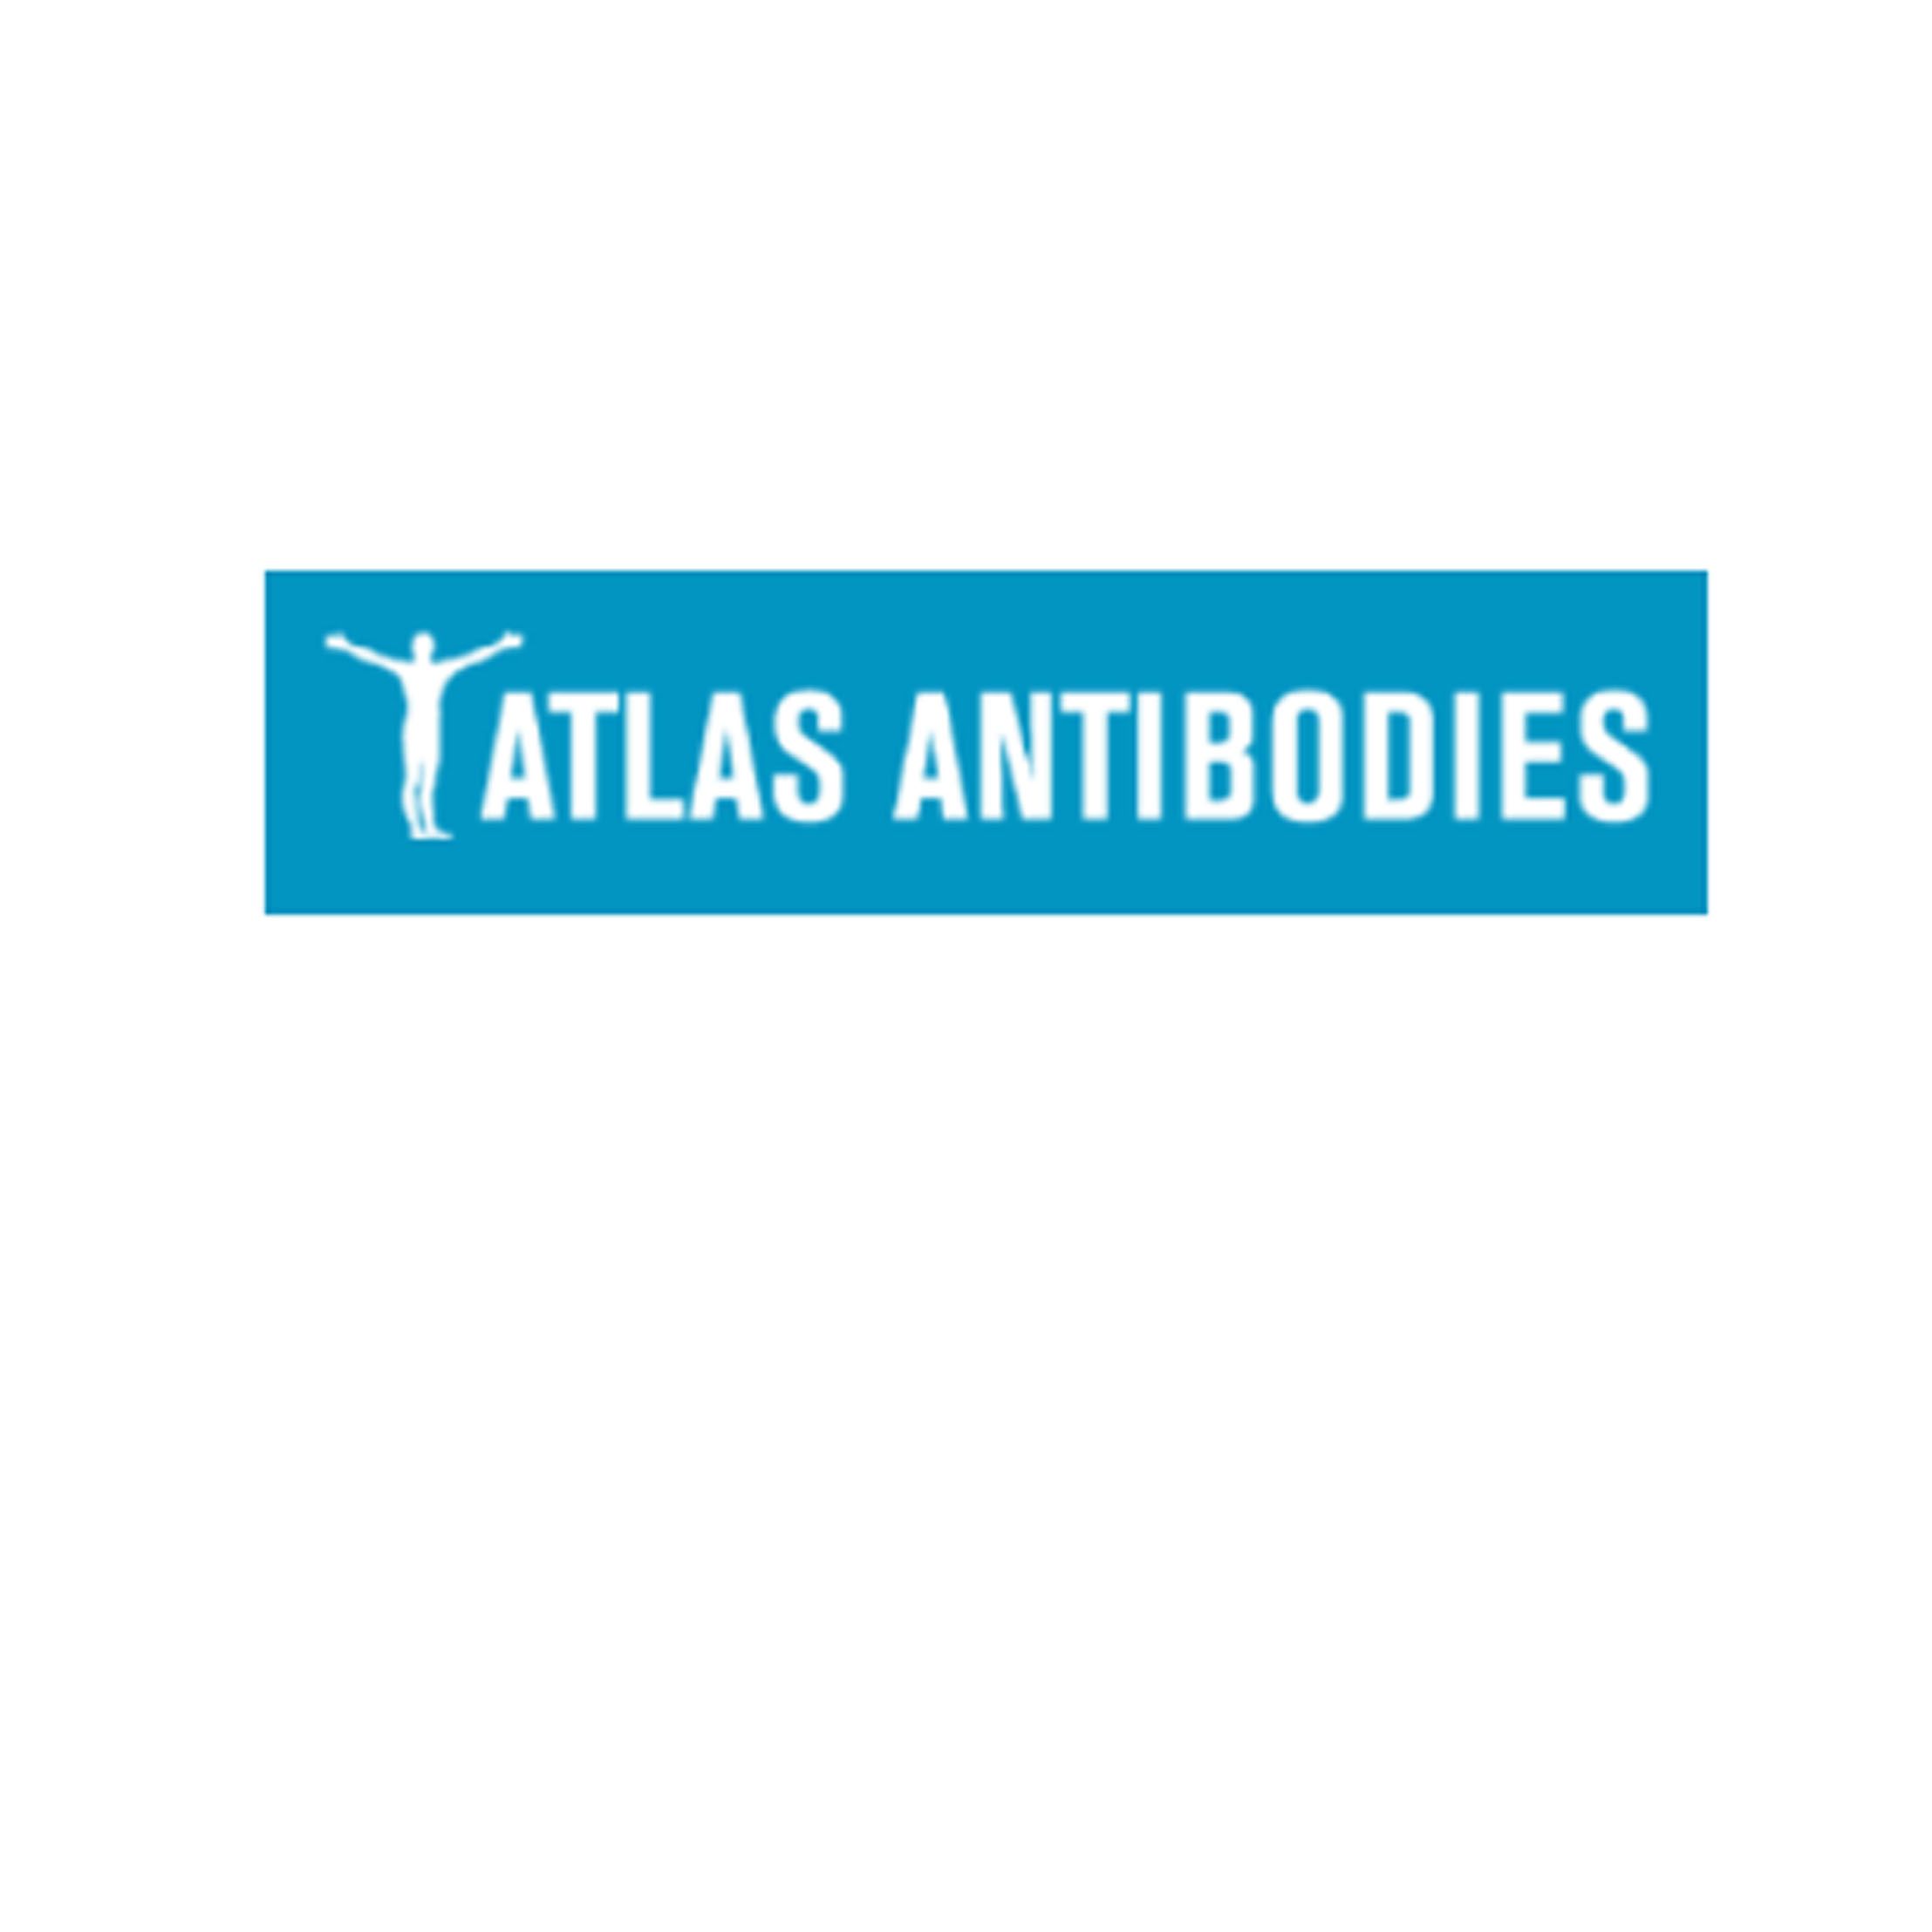 Atlas Antibodies抗体量蛋白质组学,蛋白质编码基因,基因产物